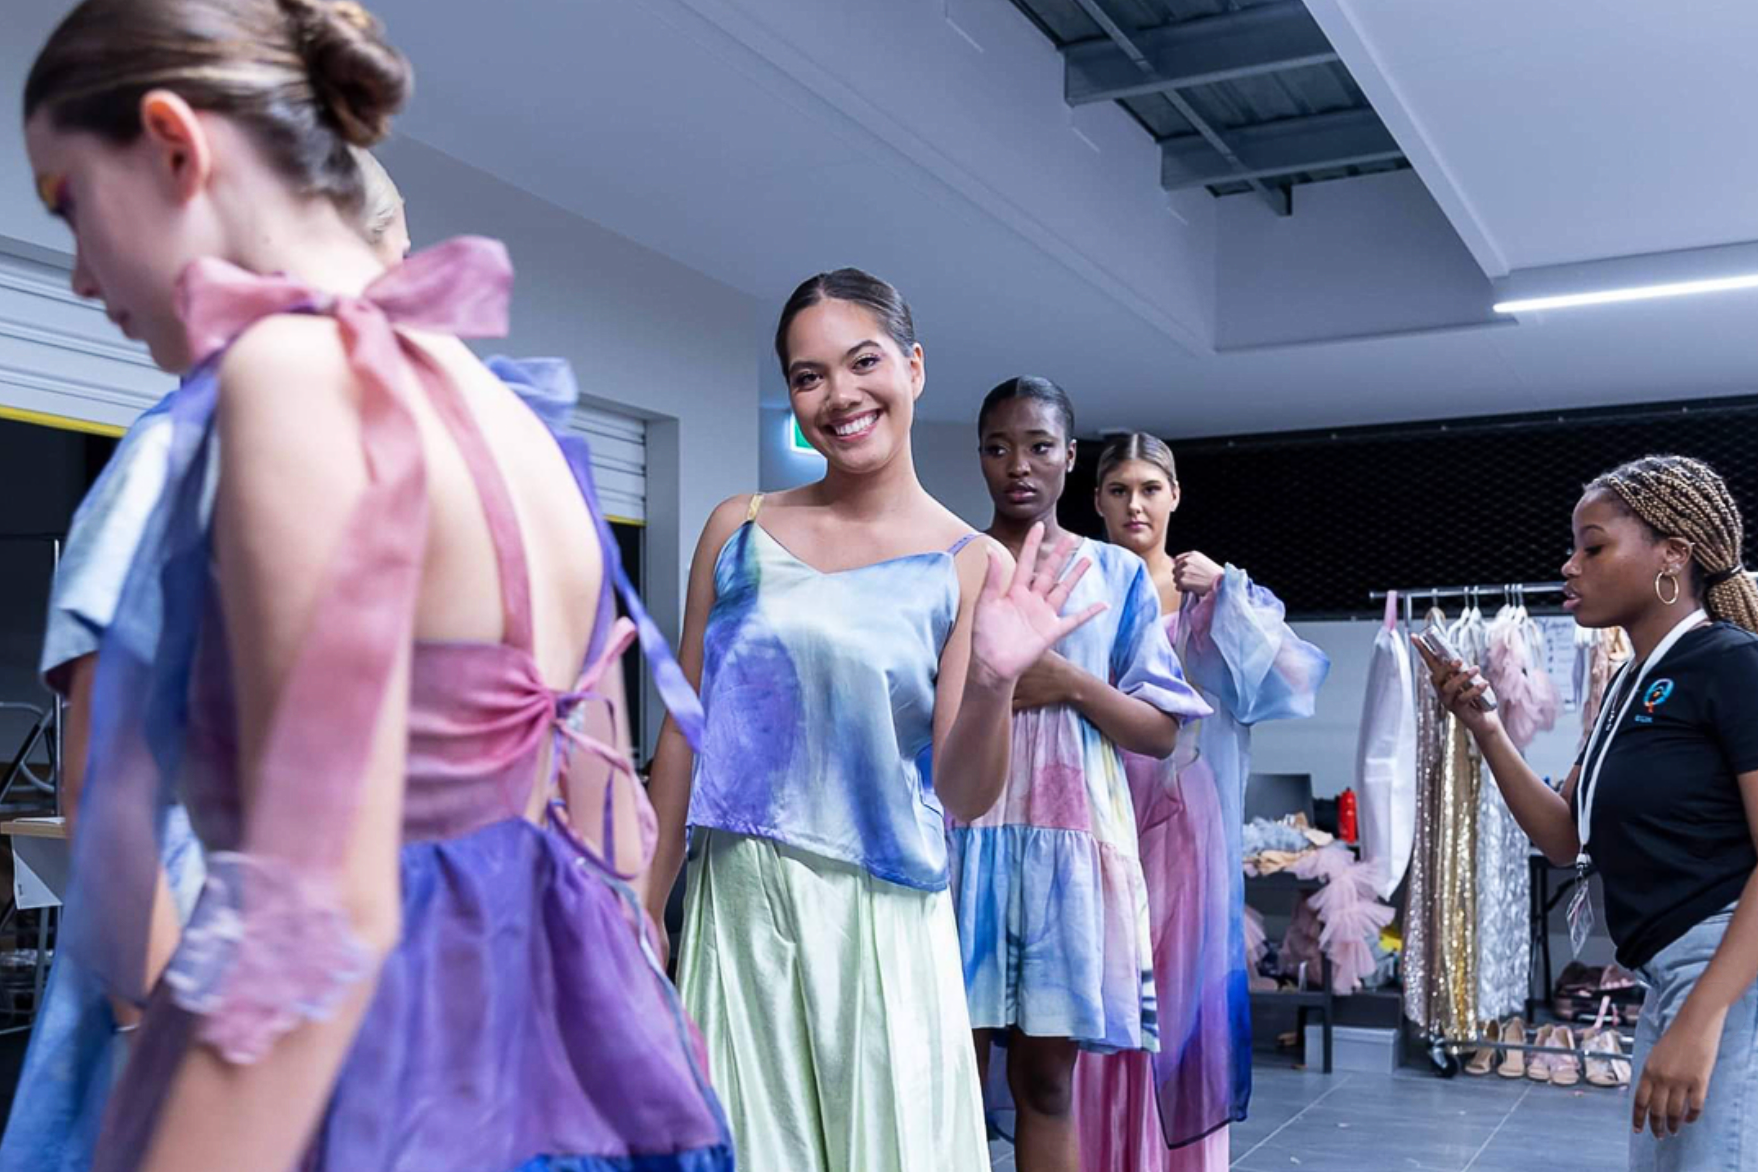 Behind the curtain at Gold Coast Fashion Week